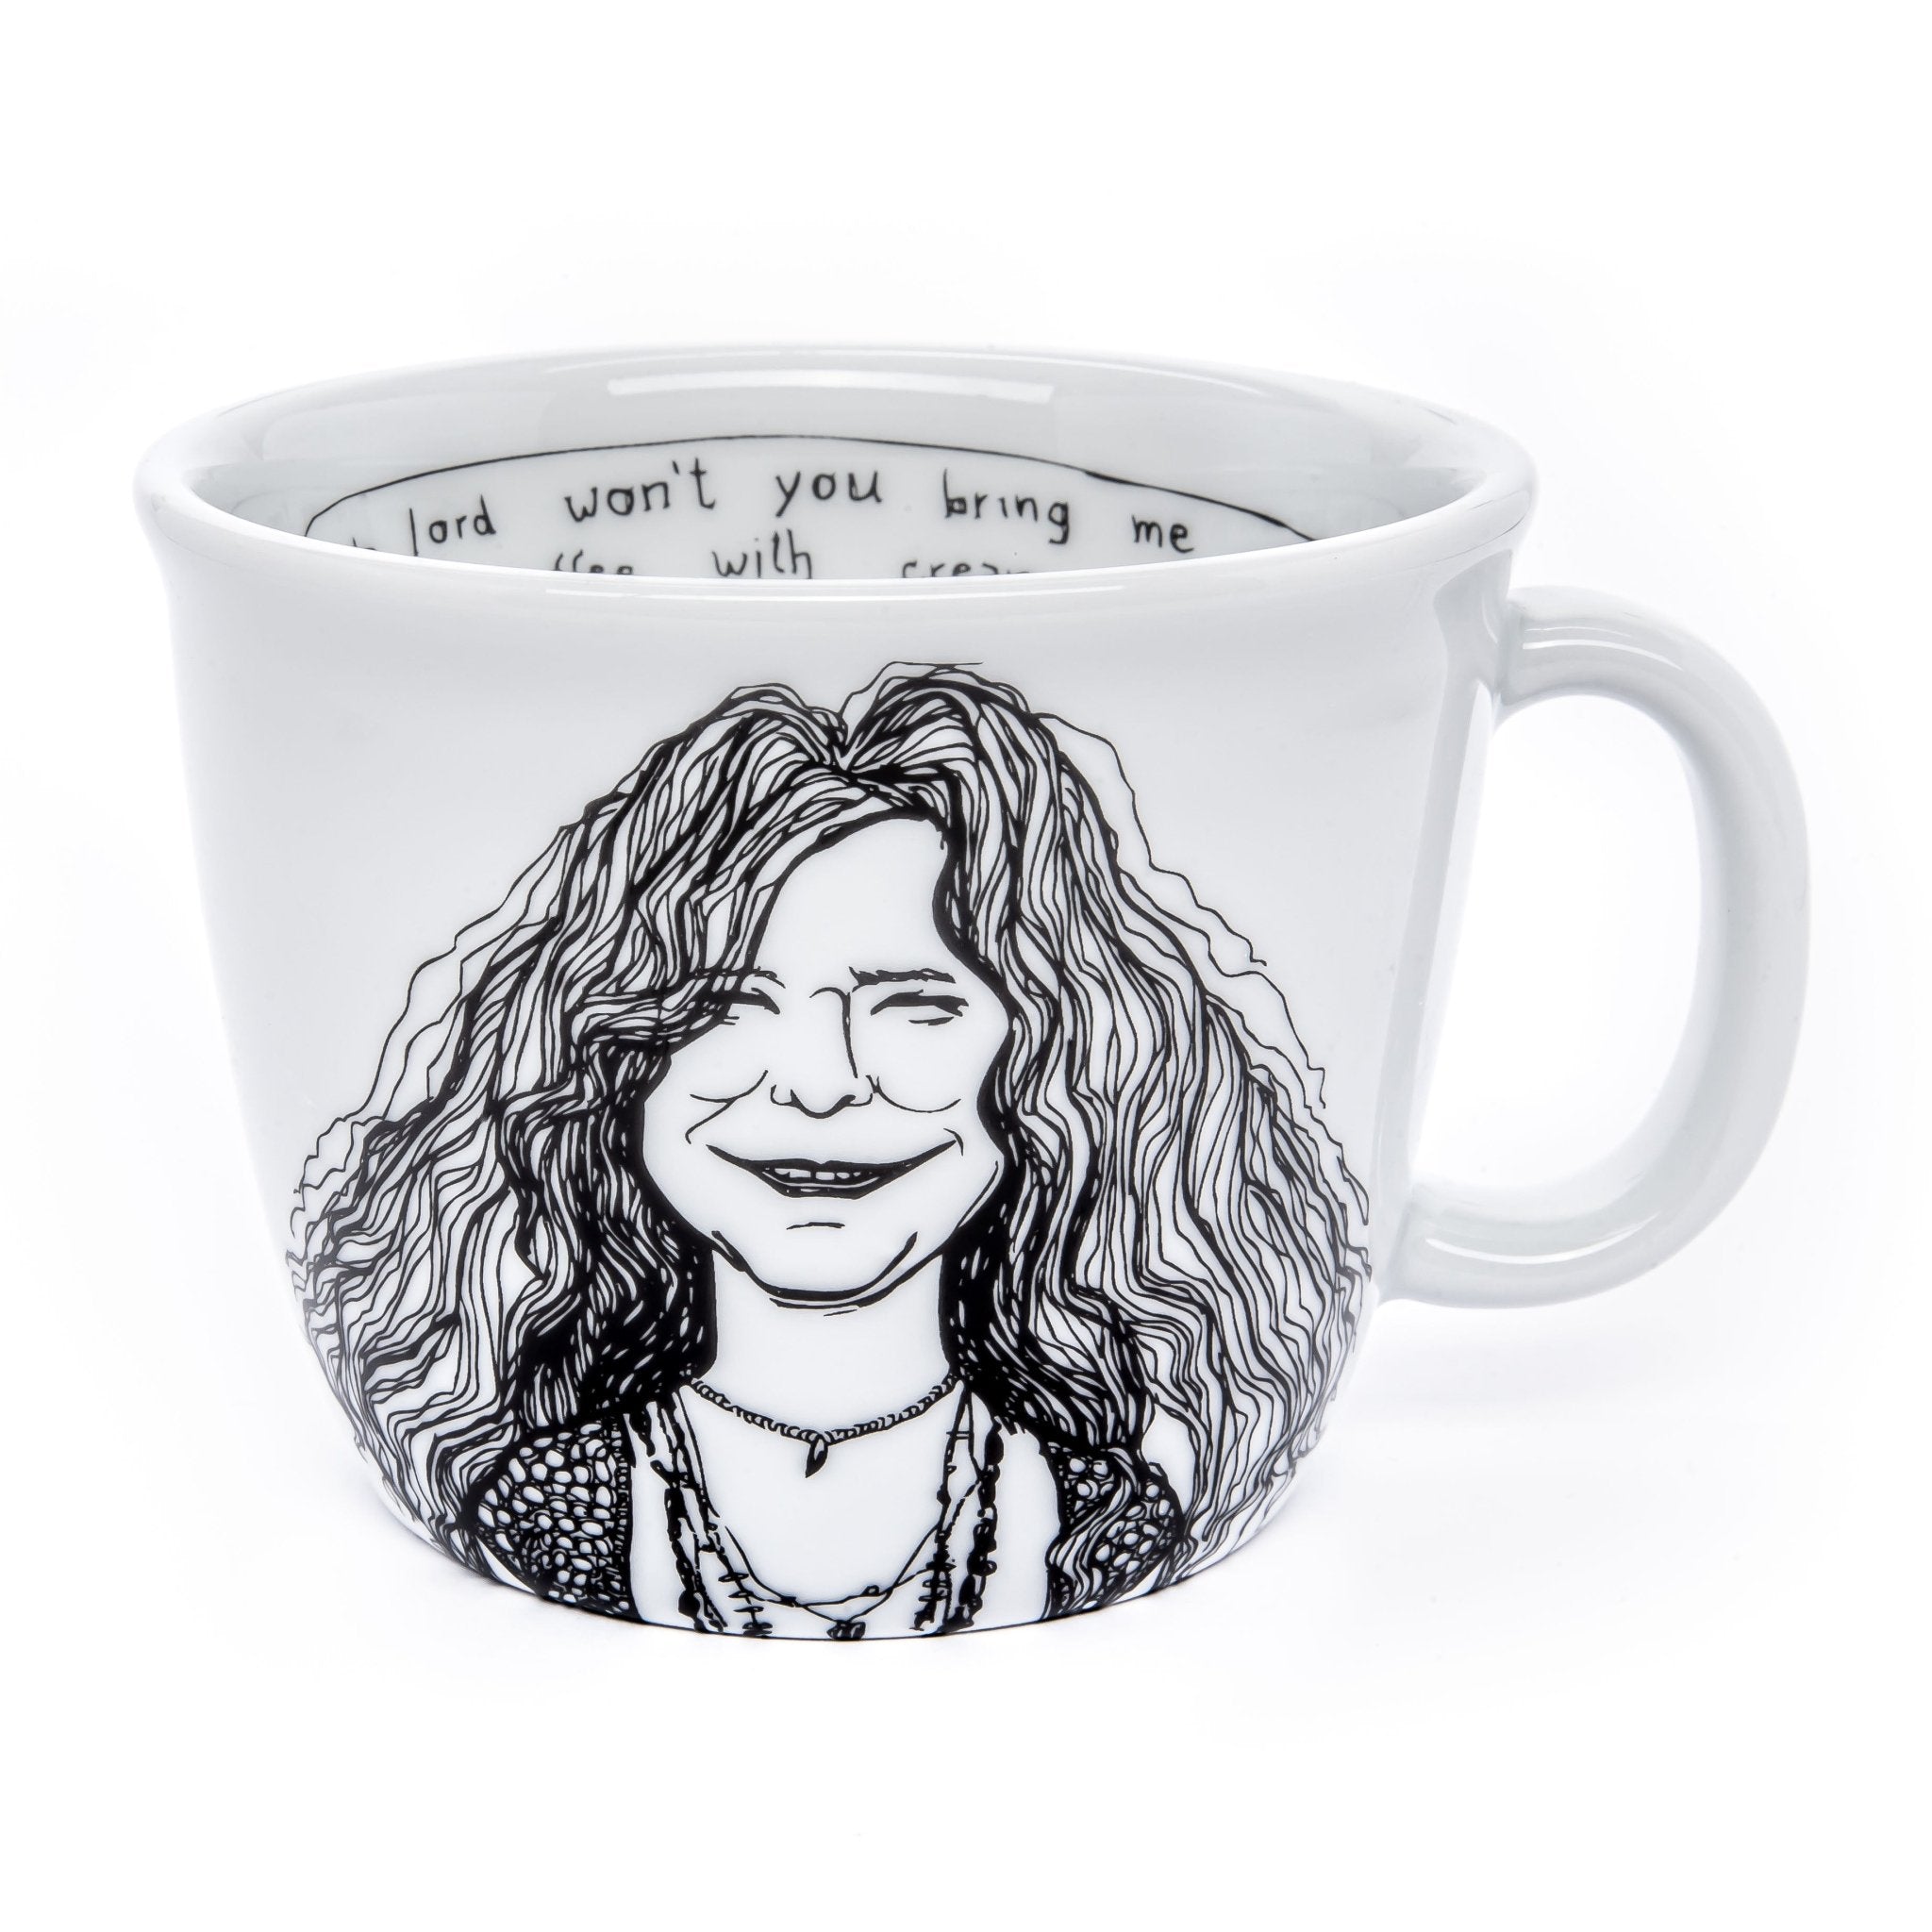 Porcelain cup inspired by Janis Joplin